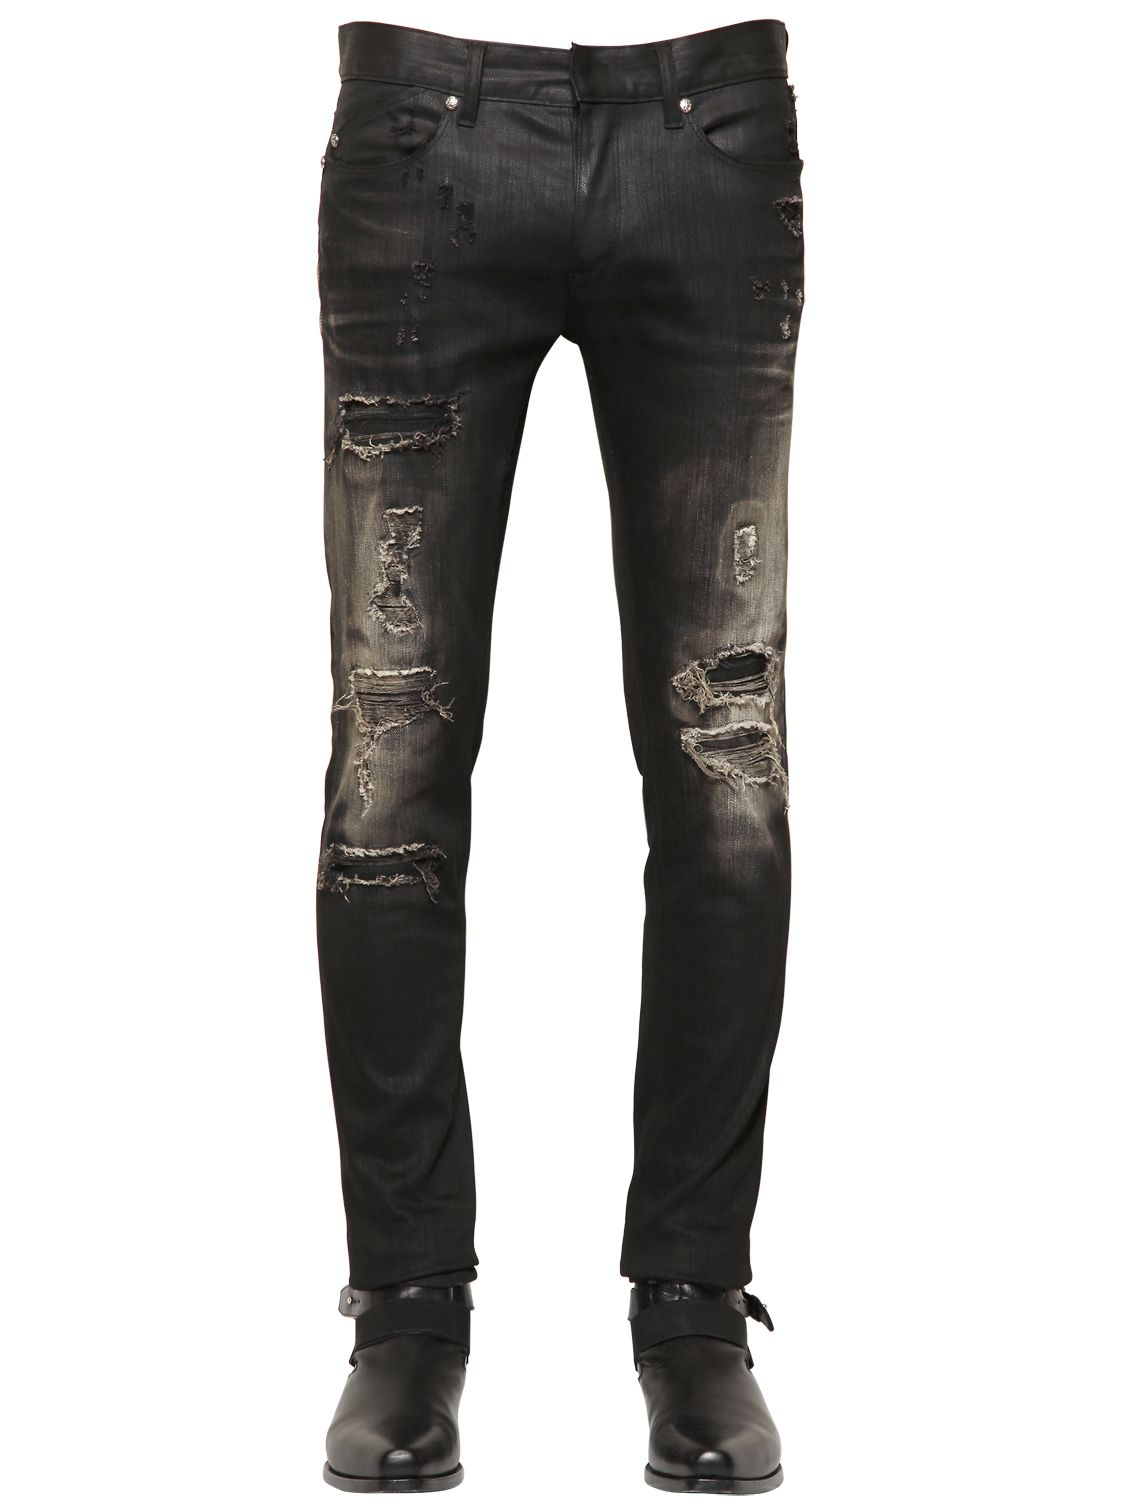 Roberto Cavalli 17cm Destroyed Stretch Denim Jeans in Black for Men - Lyst